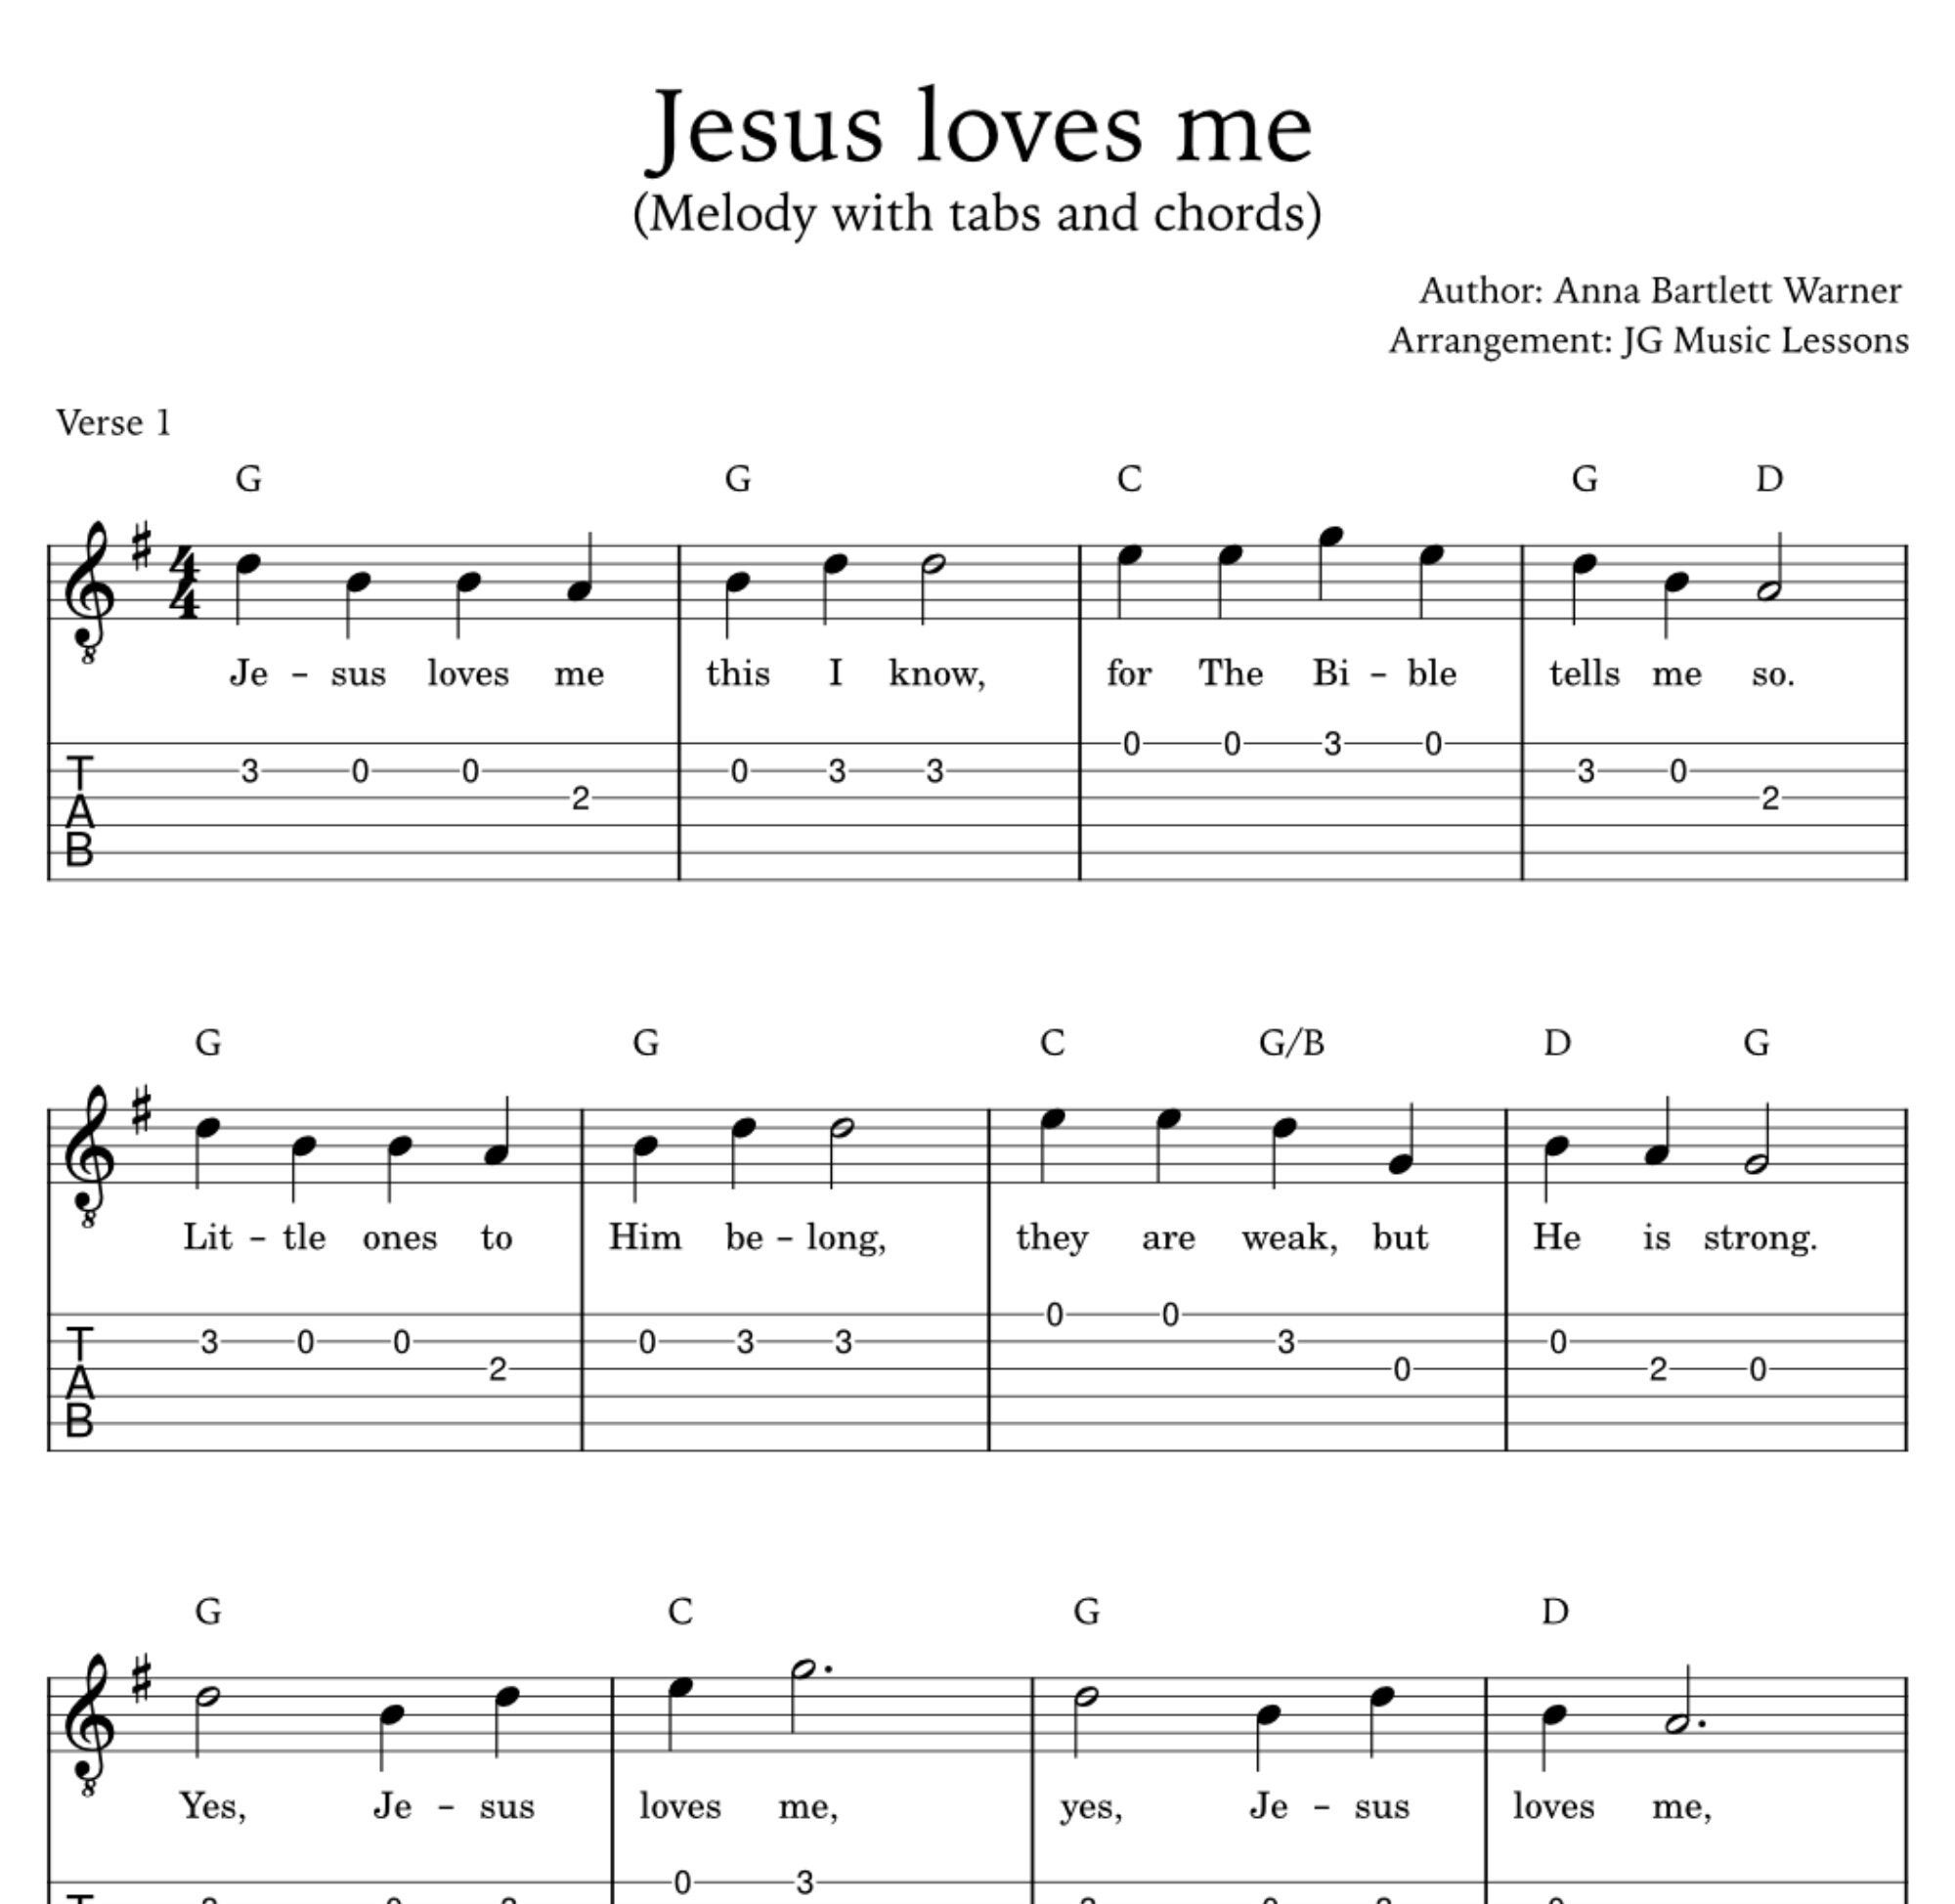 Warner - Jesus Loves Me sheet music for guitar (chords) [PDF]